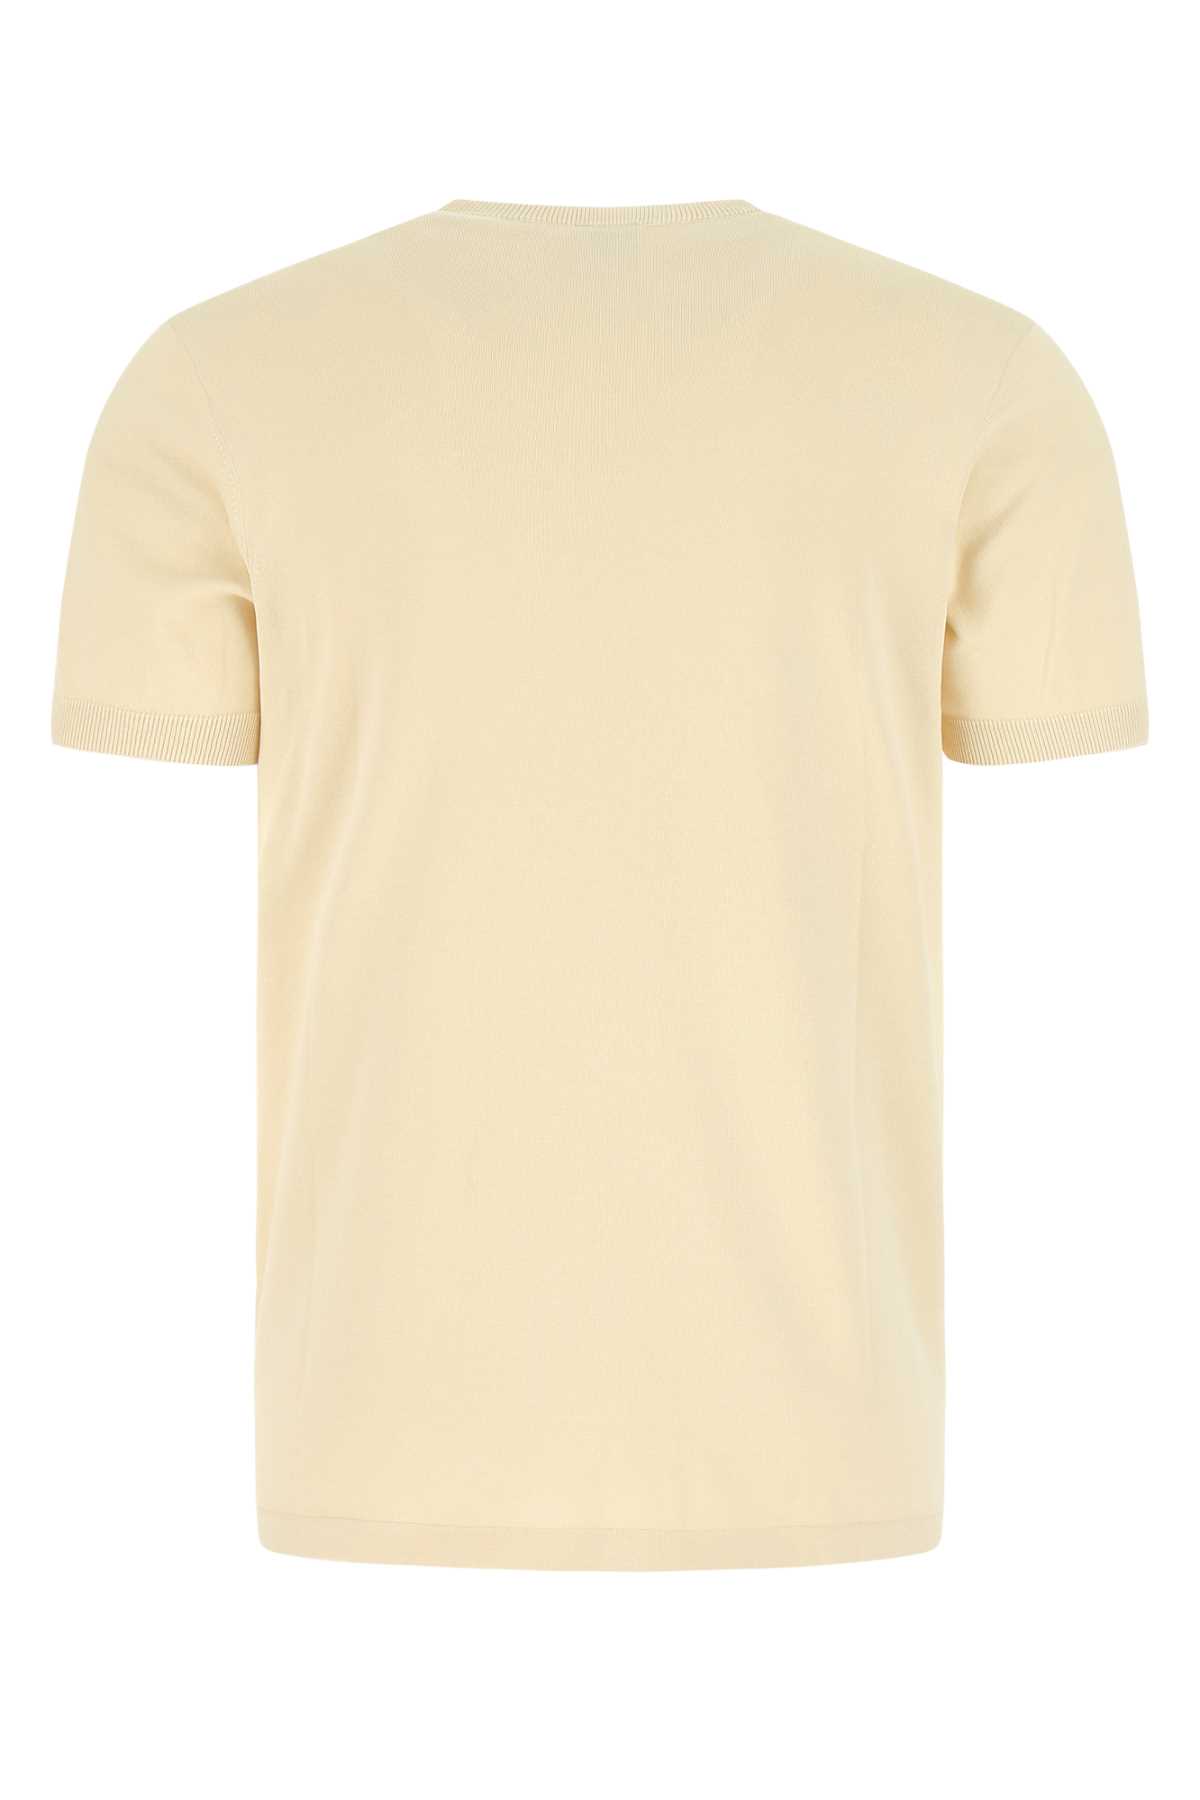 Aspesi Sand Cotton T-shirt In 01043